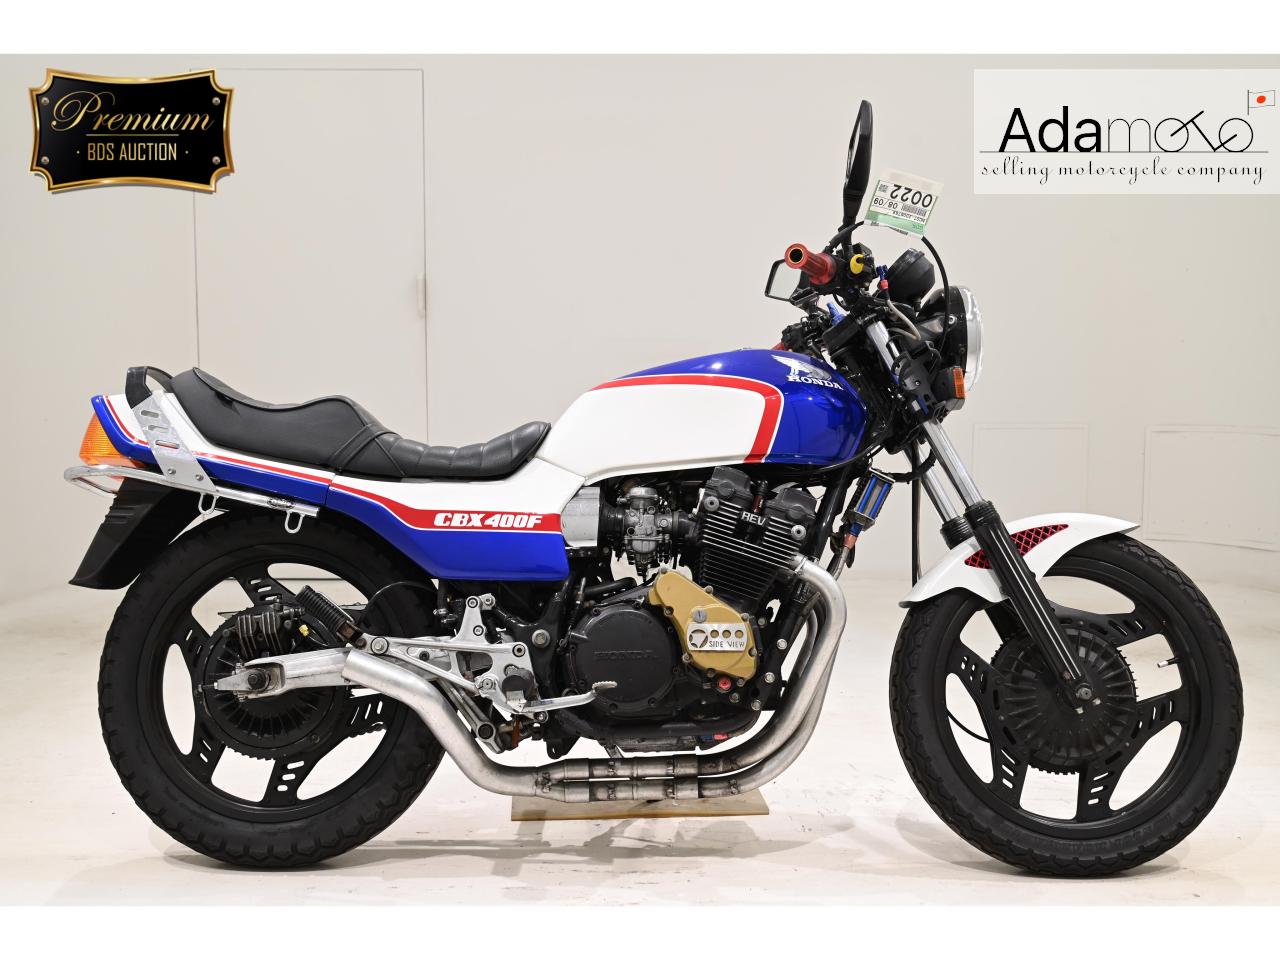 Honda CBX400F - Adamoto - Motorcycles from Japan